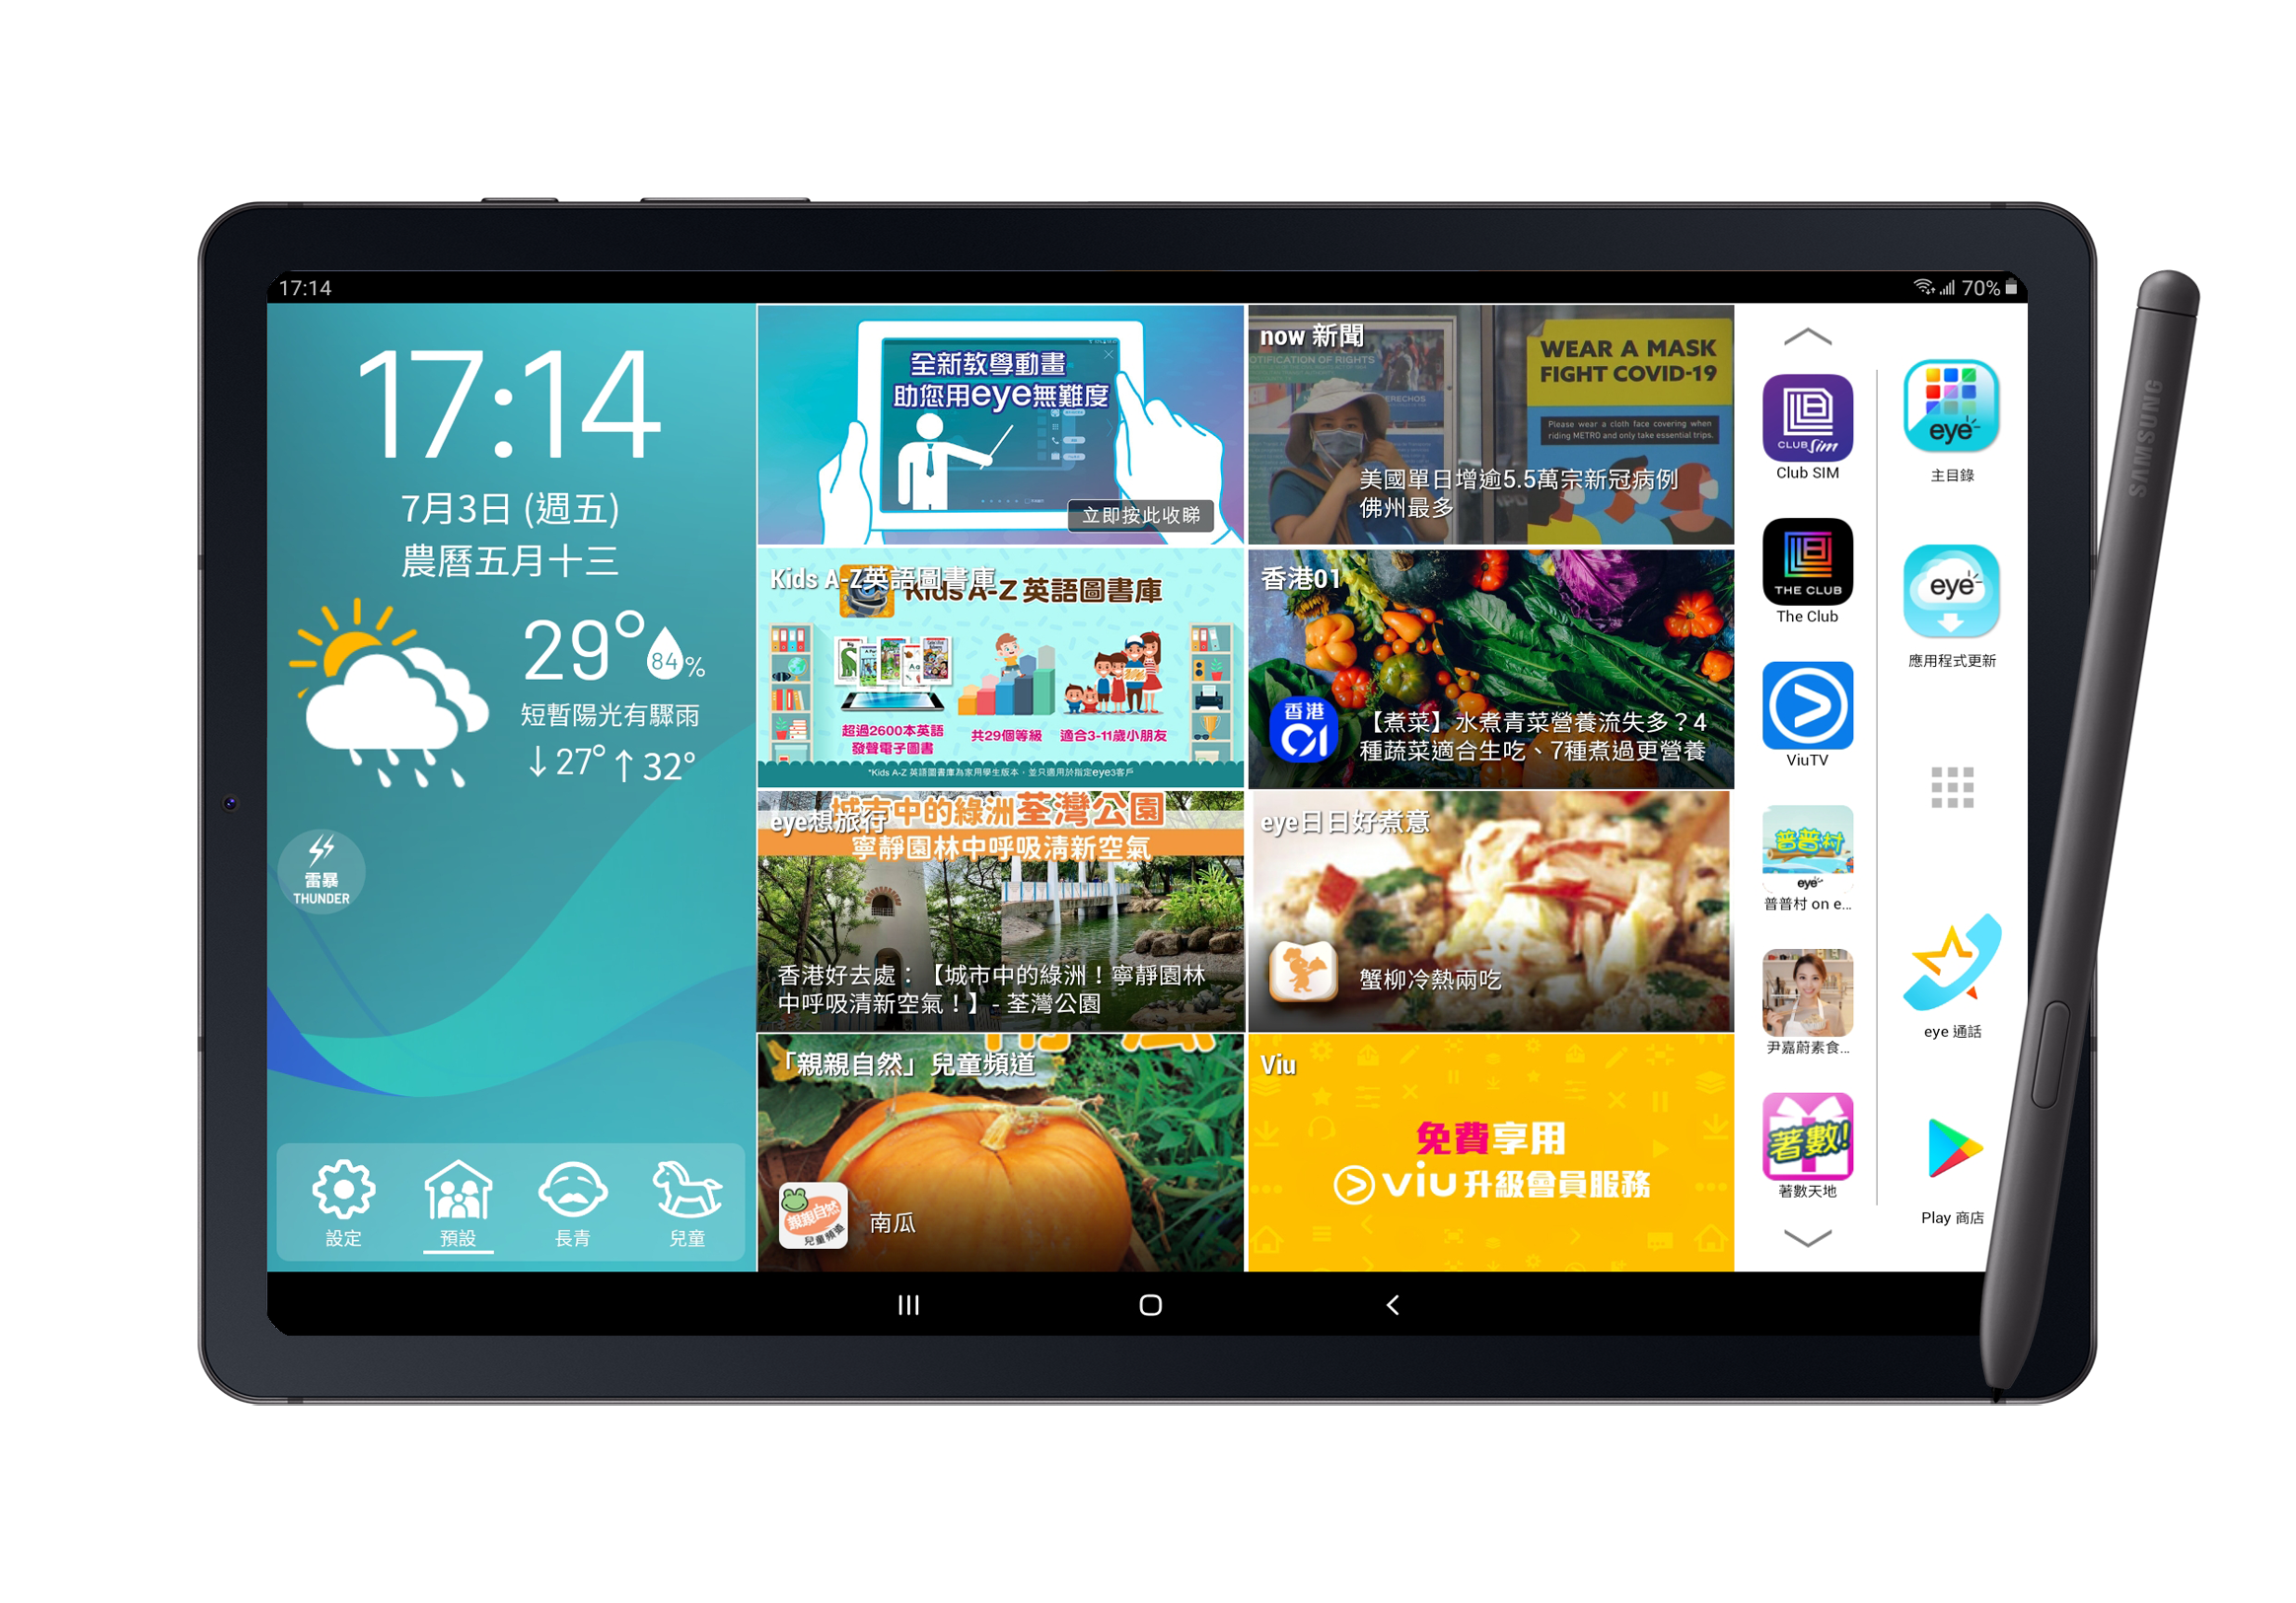 Samsung Galaxy Tab S6 Lite 10.4” LTE